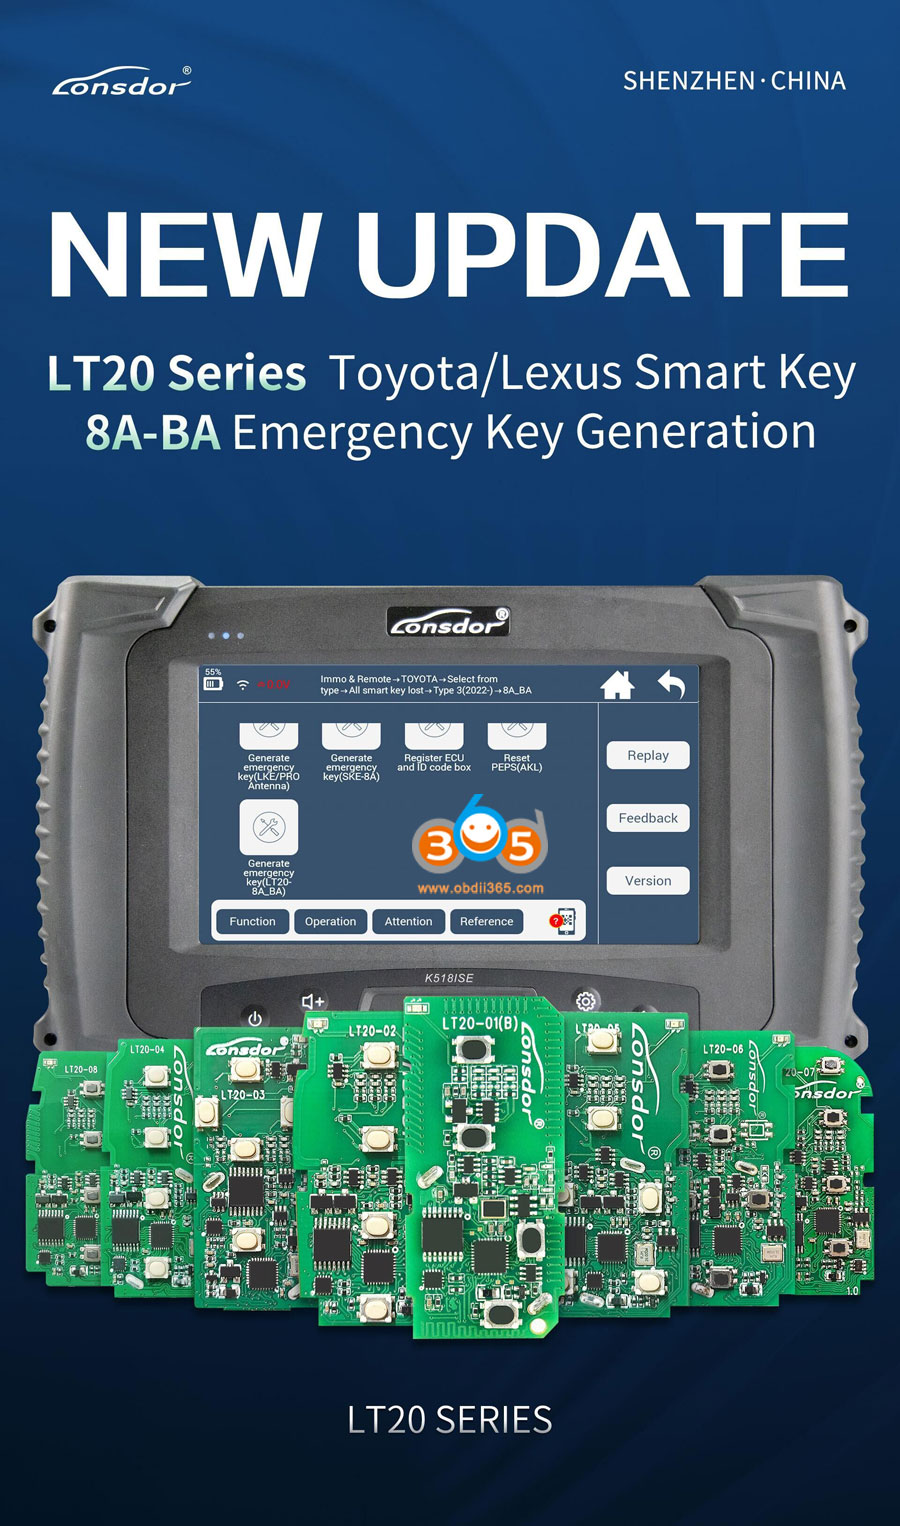 LT20 Series adds 8A BA Toyota/Lexus Smart Key